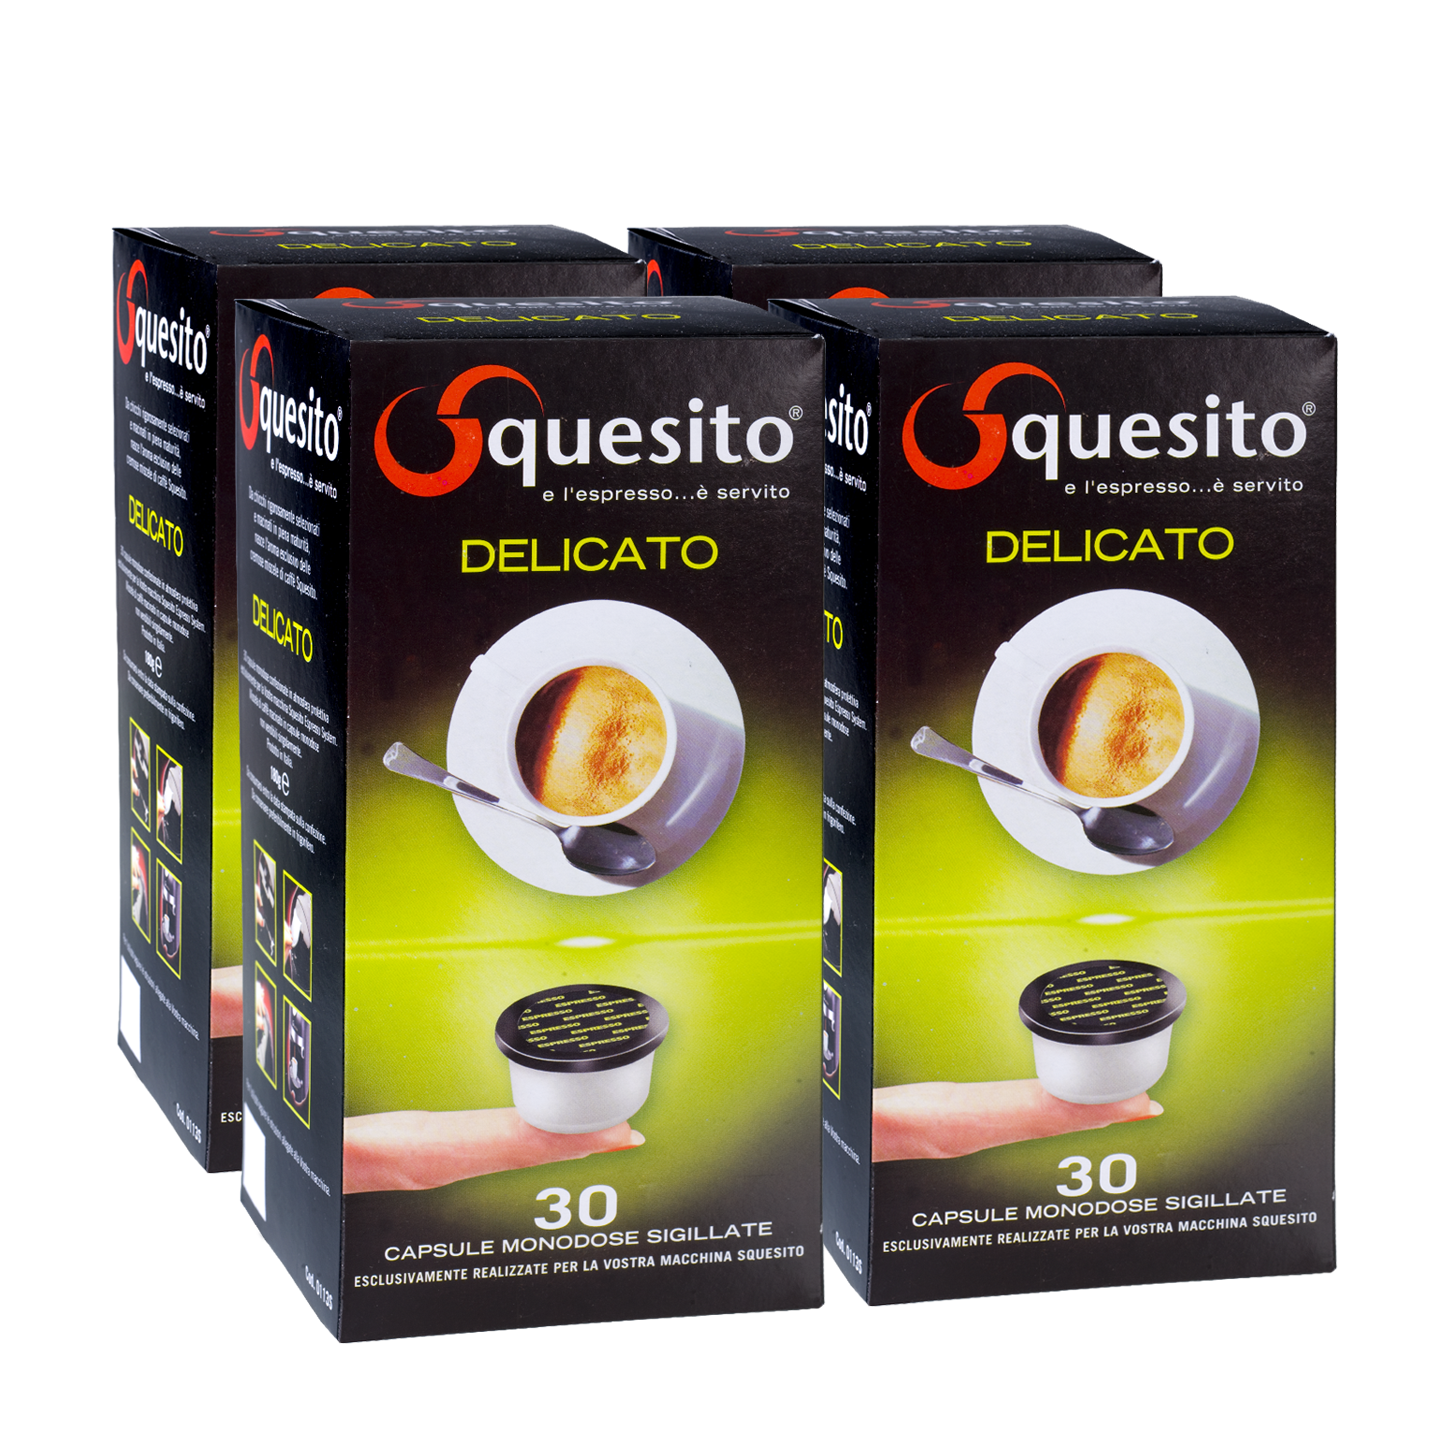 Squesito Rotonda капсулы. Капсулы для кофемашины Squesito 41072x. Кофе в капсулах Squesito. Squesito капсулы 30 штук. Squesito капсулы купить